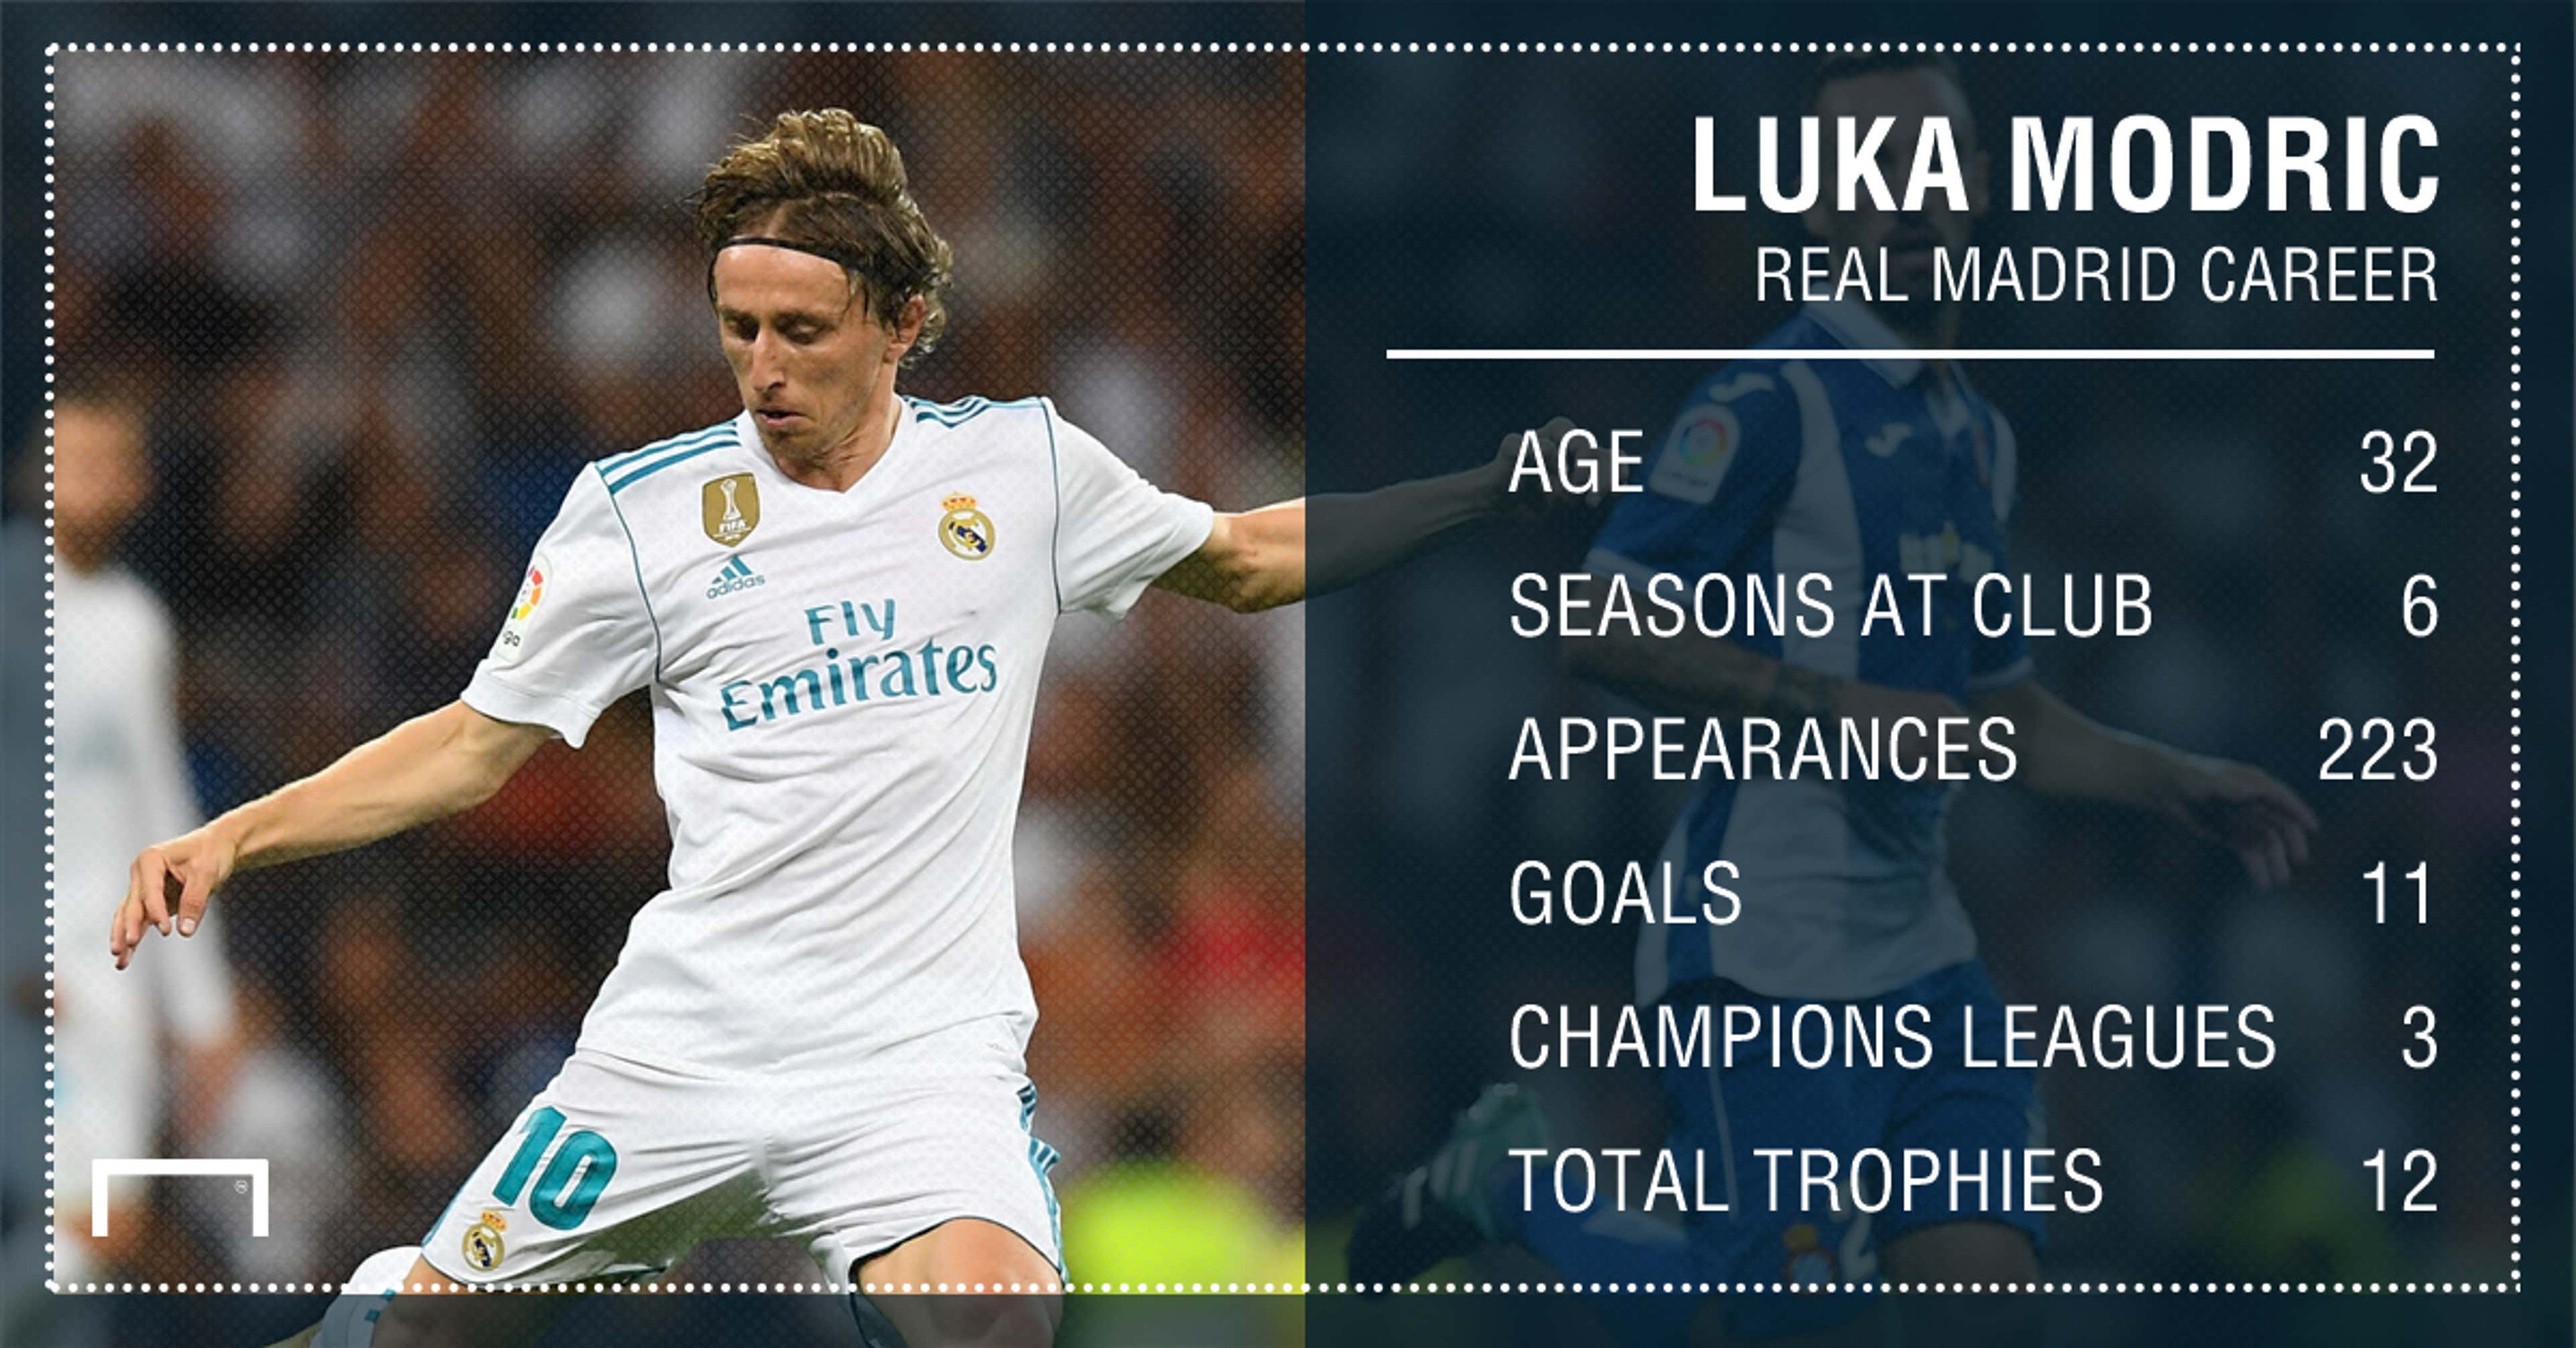 Luka Modric Real Madrid stats